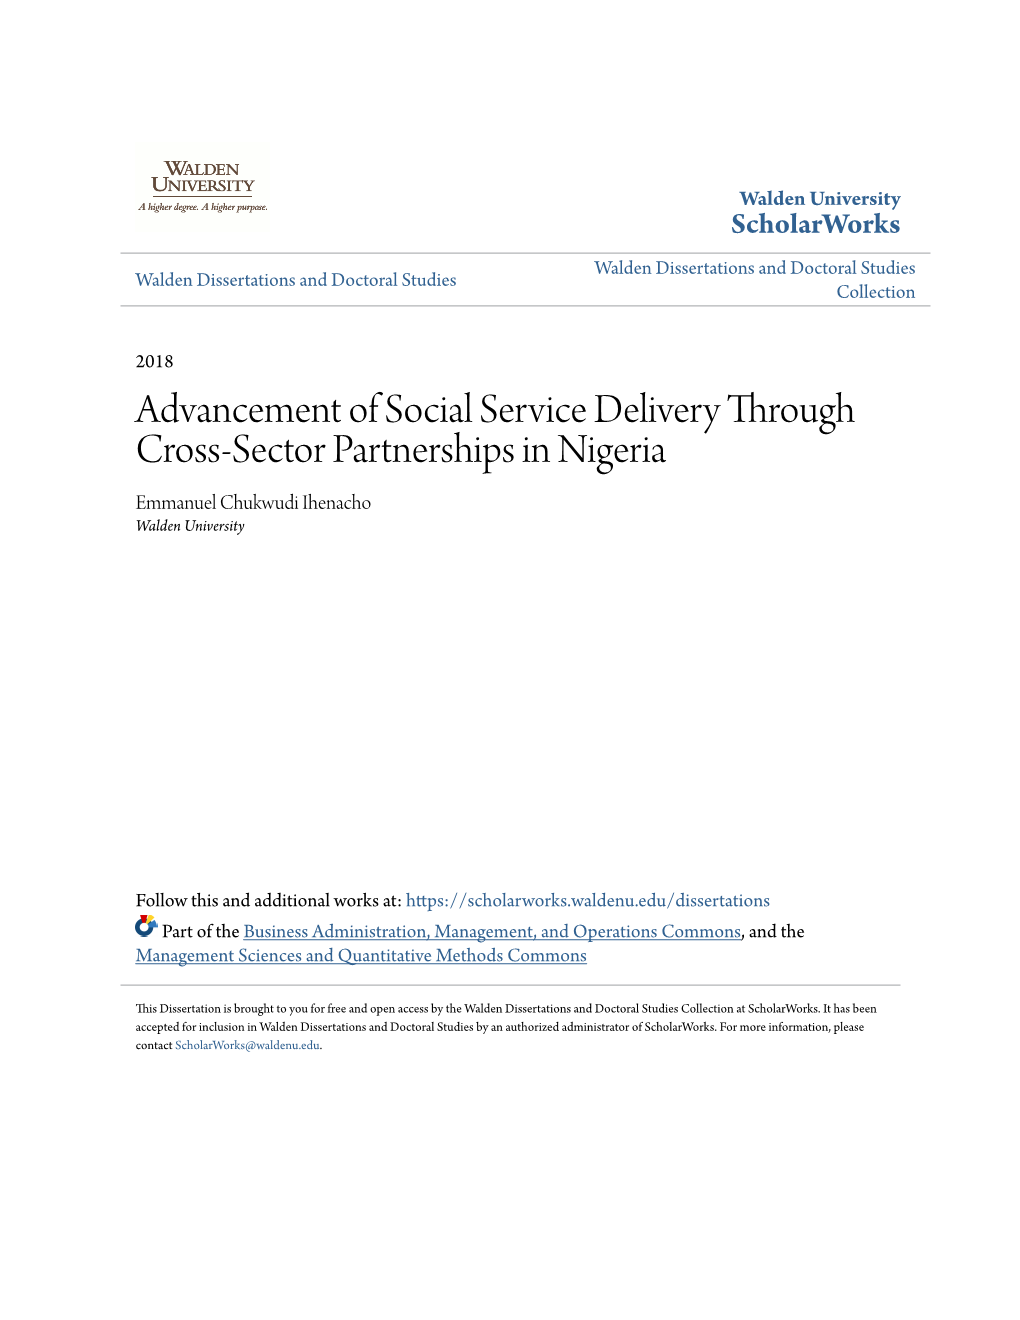 Advancement of Social Service Delivery Through Cross-Sector Partnerships in Nigeria Emmanuel Chukwudi Ihenacho Walden University